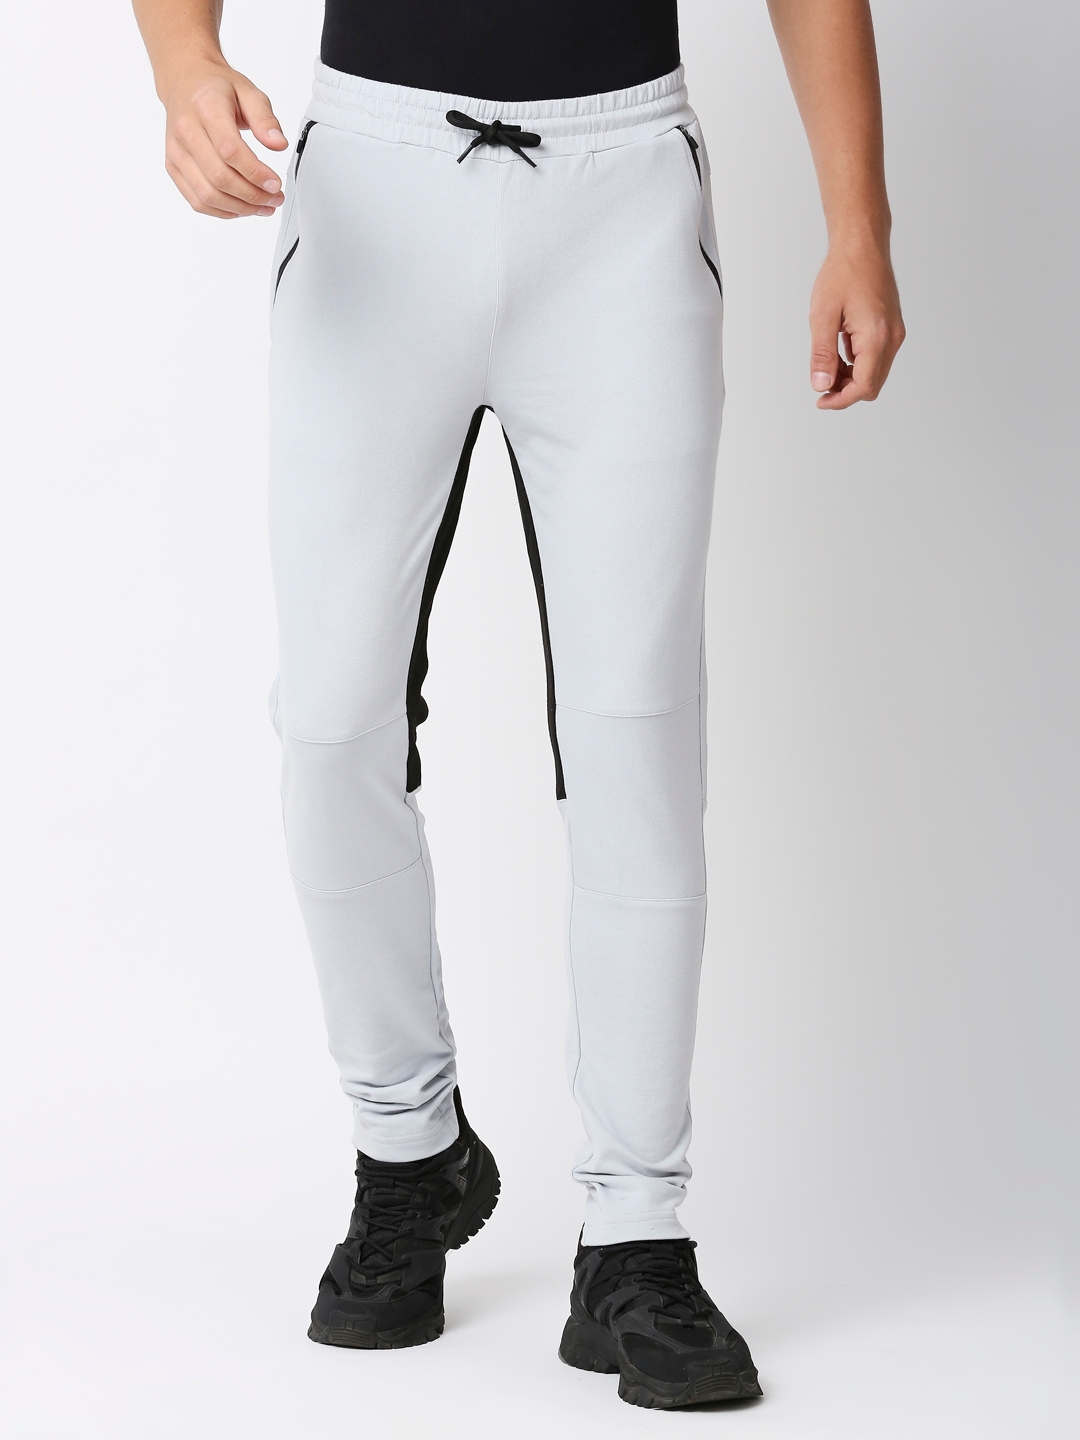 FITZ | Men's Slim Fit Grey Cotton Blend Casual Joogers